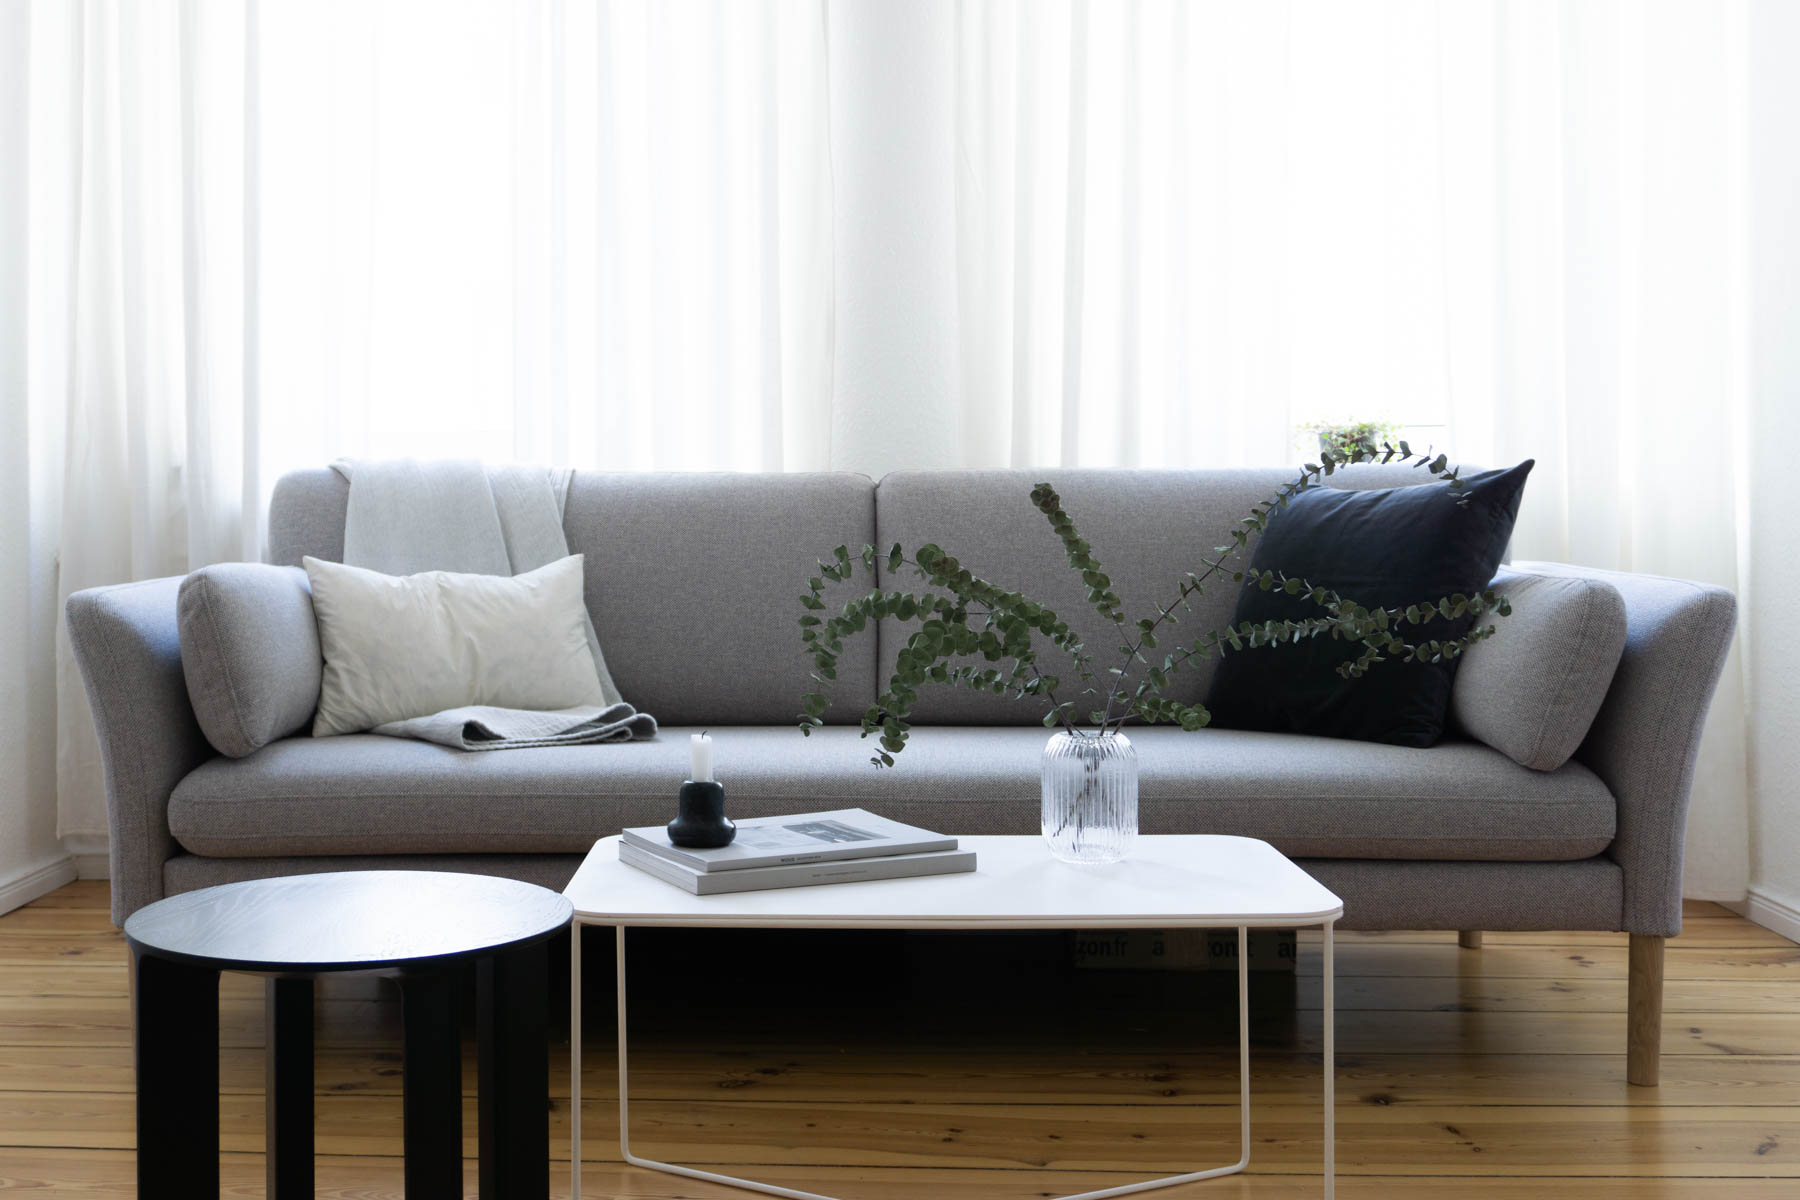 Eucalyptu and Grey Sofa, Minimalist Living Room, Scandinavian Home - Berlin Flat Rebecca Goddard - RG Daily Blog